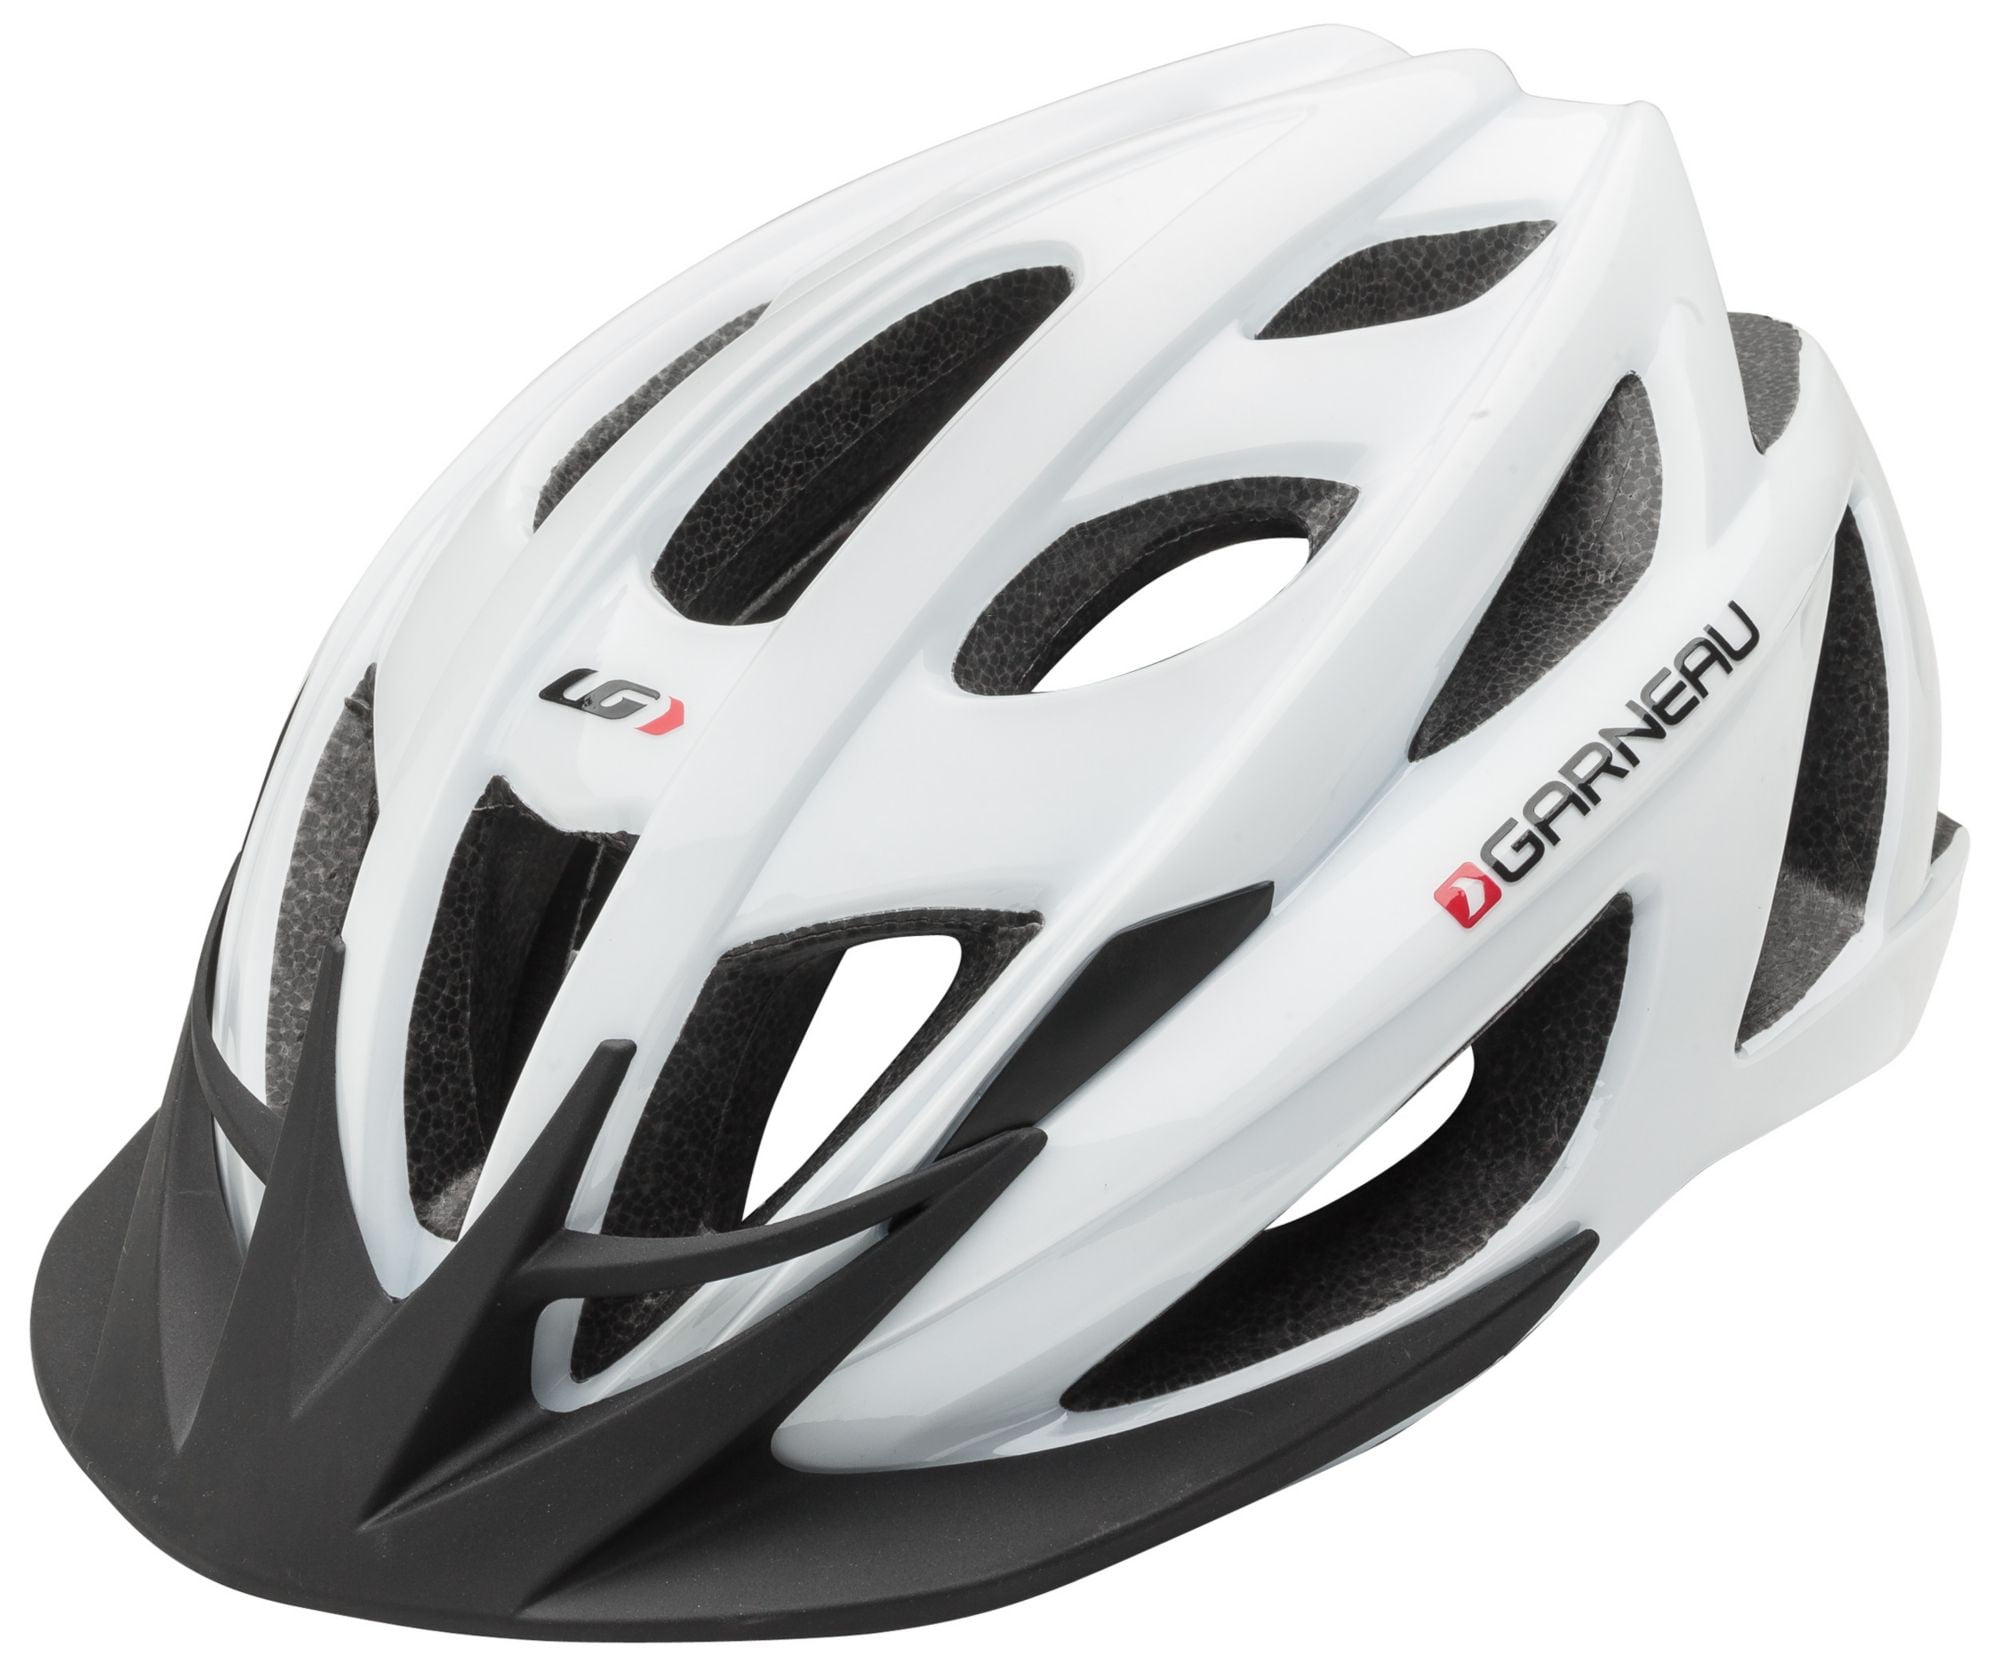 Louis Garneau Global II Cycling Helmet Size M/L Red/Grey 54-61cm 